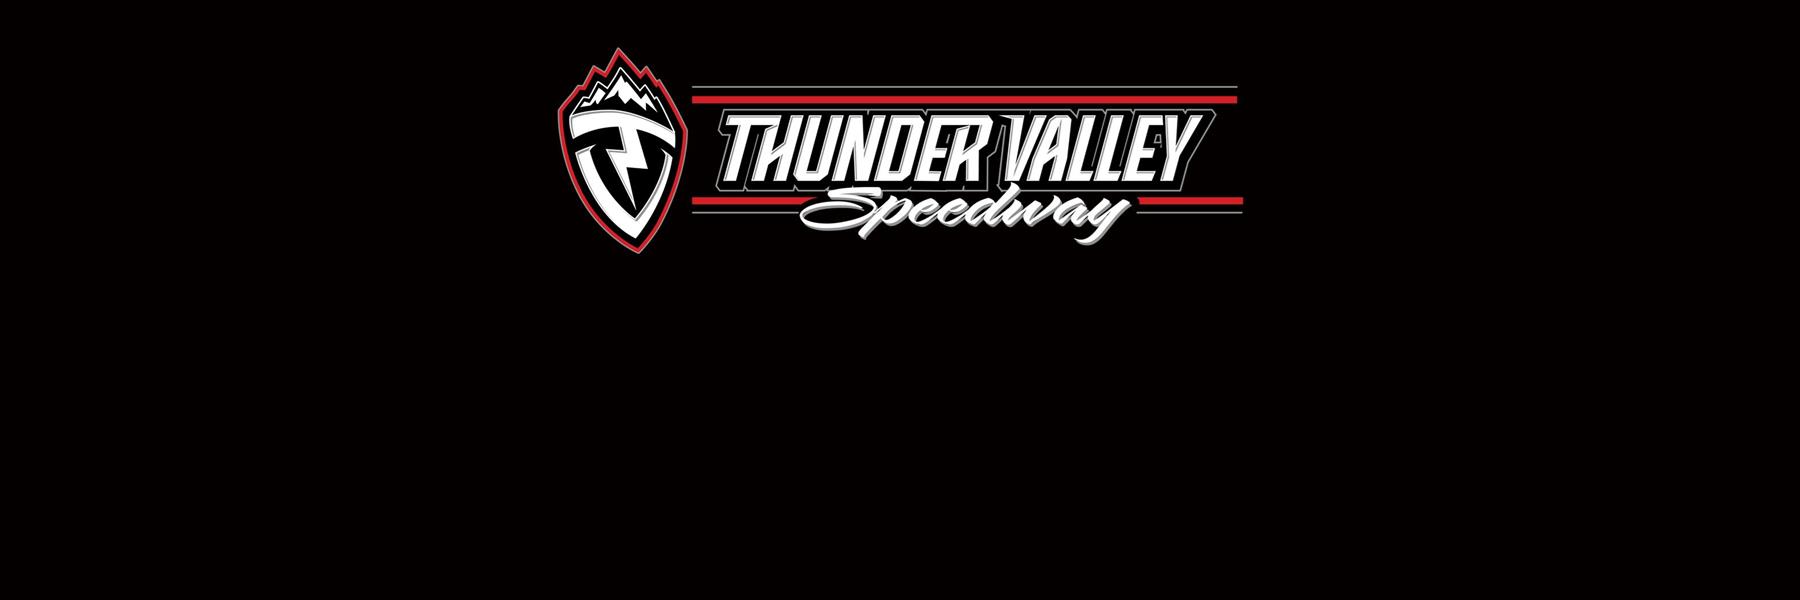 6/18/2011 - Thunder Valley Speedway (AK)